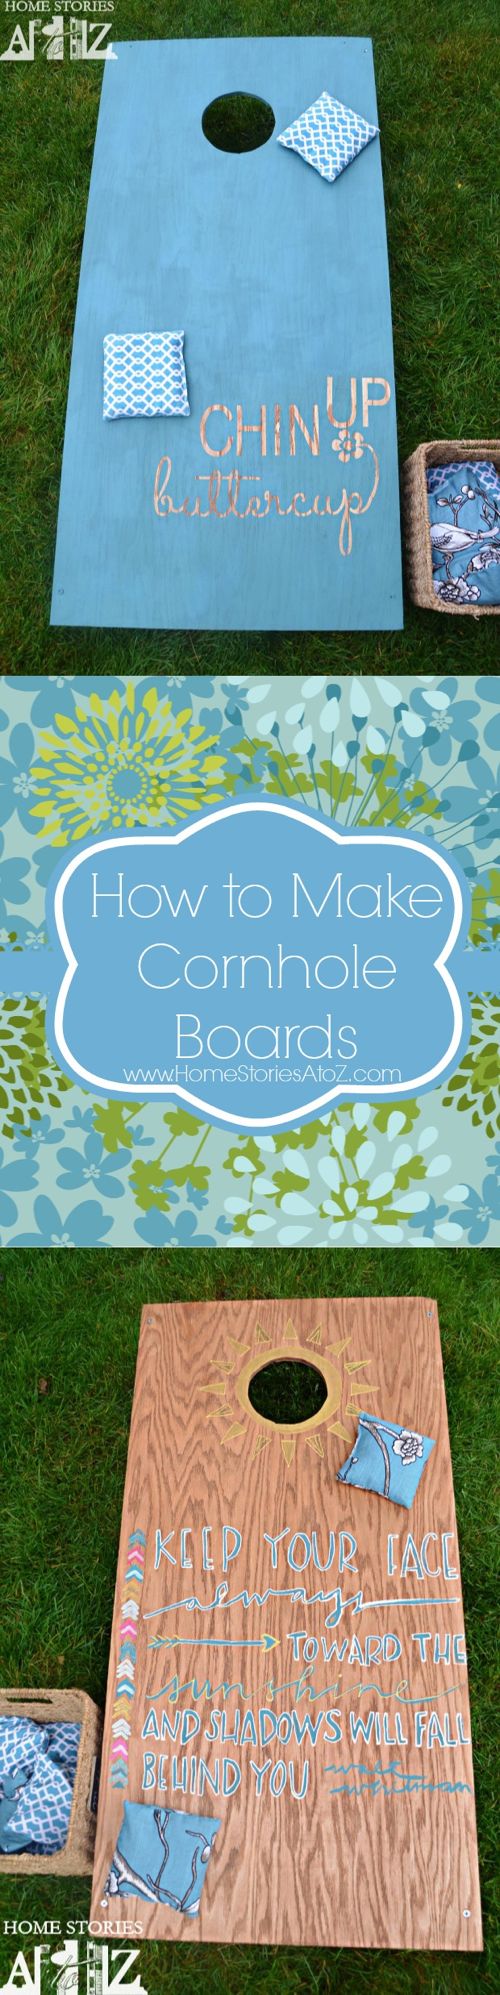 how to build cornhole board